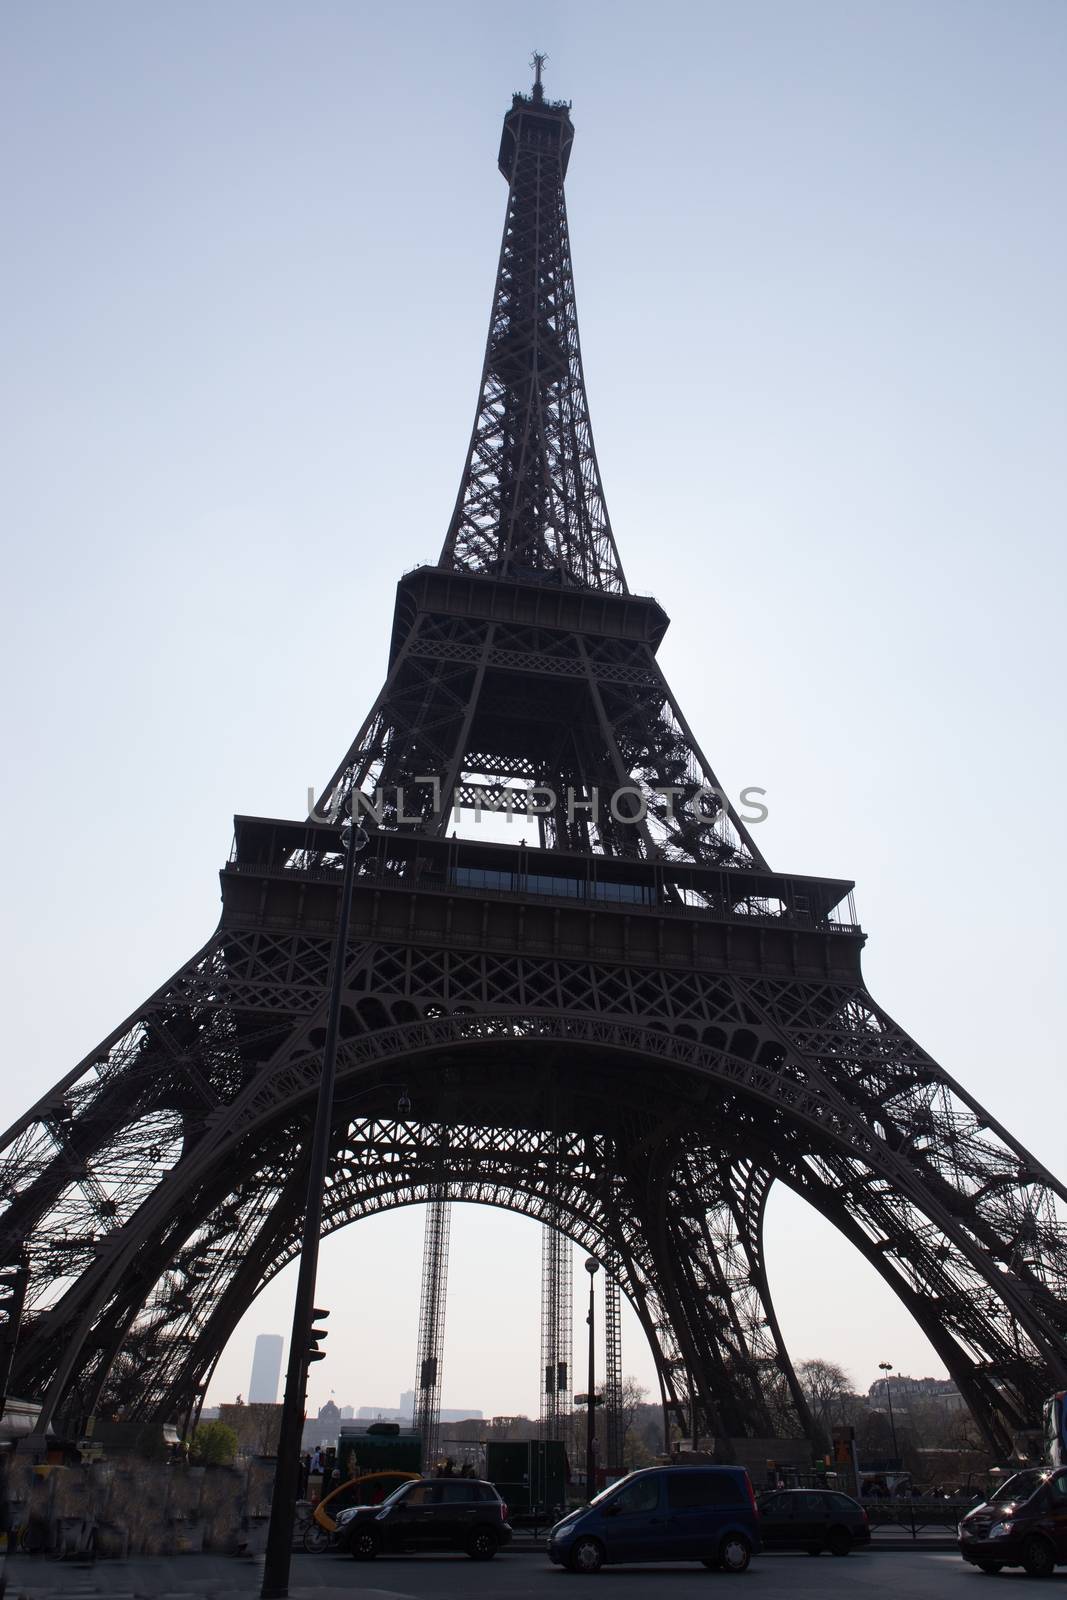 Eiffel Tower in Paris France silhouette